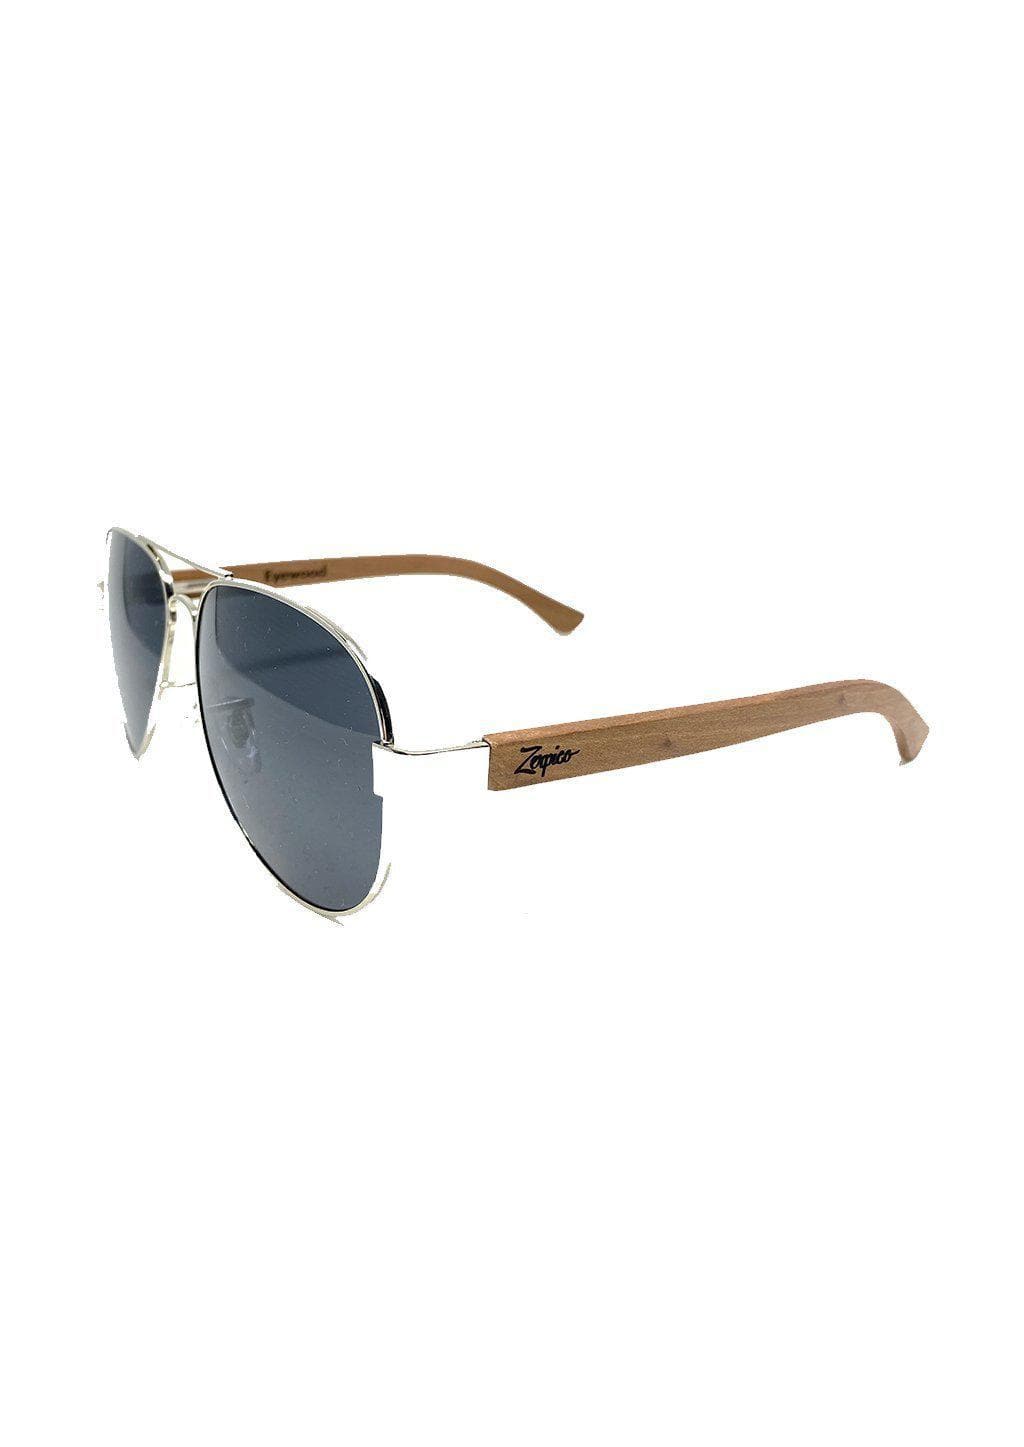 Eyewood Aviators - Falcon - Wooden sunglasses